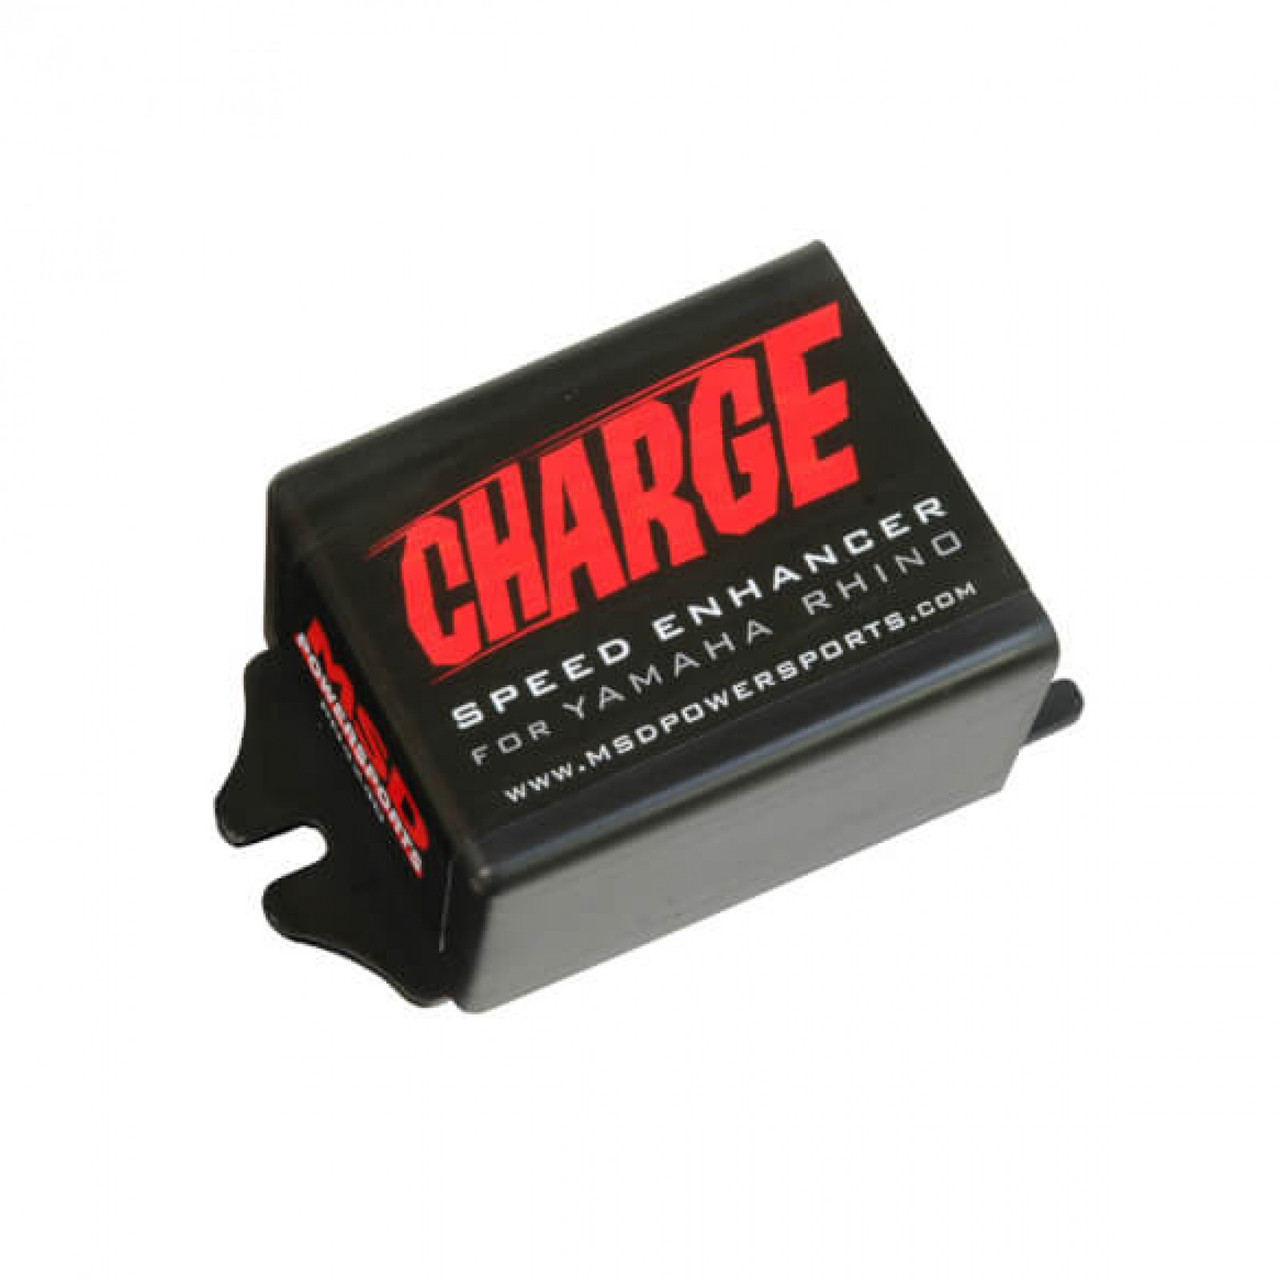 Charge Speed Enhancer for Yamaha Rhino 660 (MSD-24240)